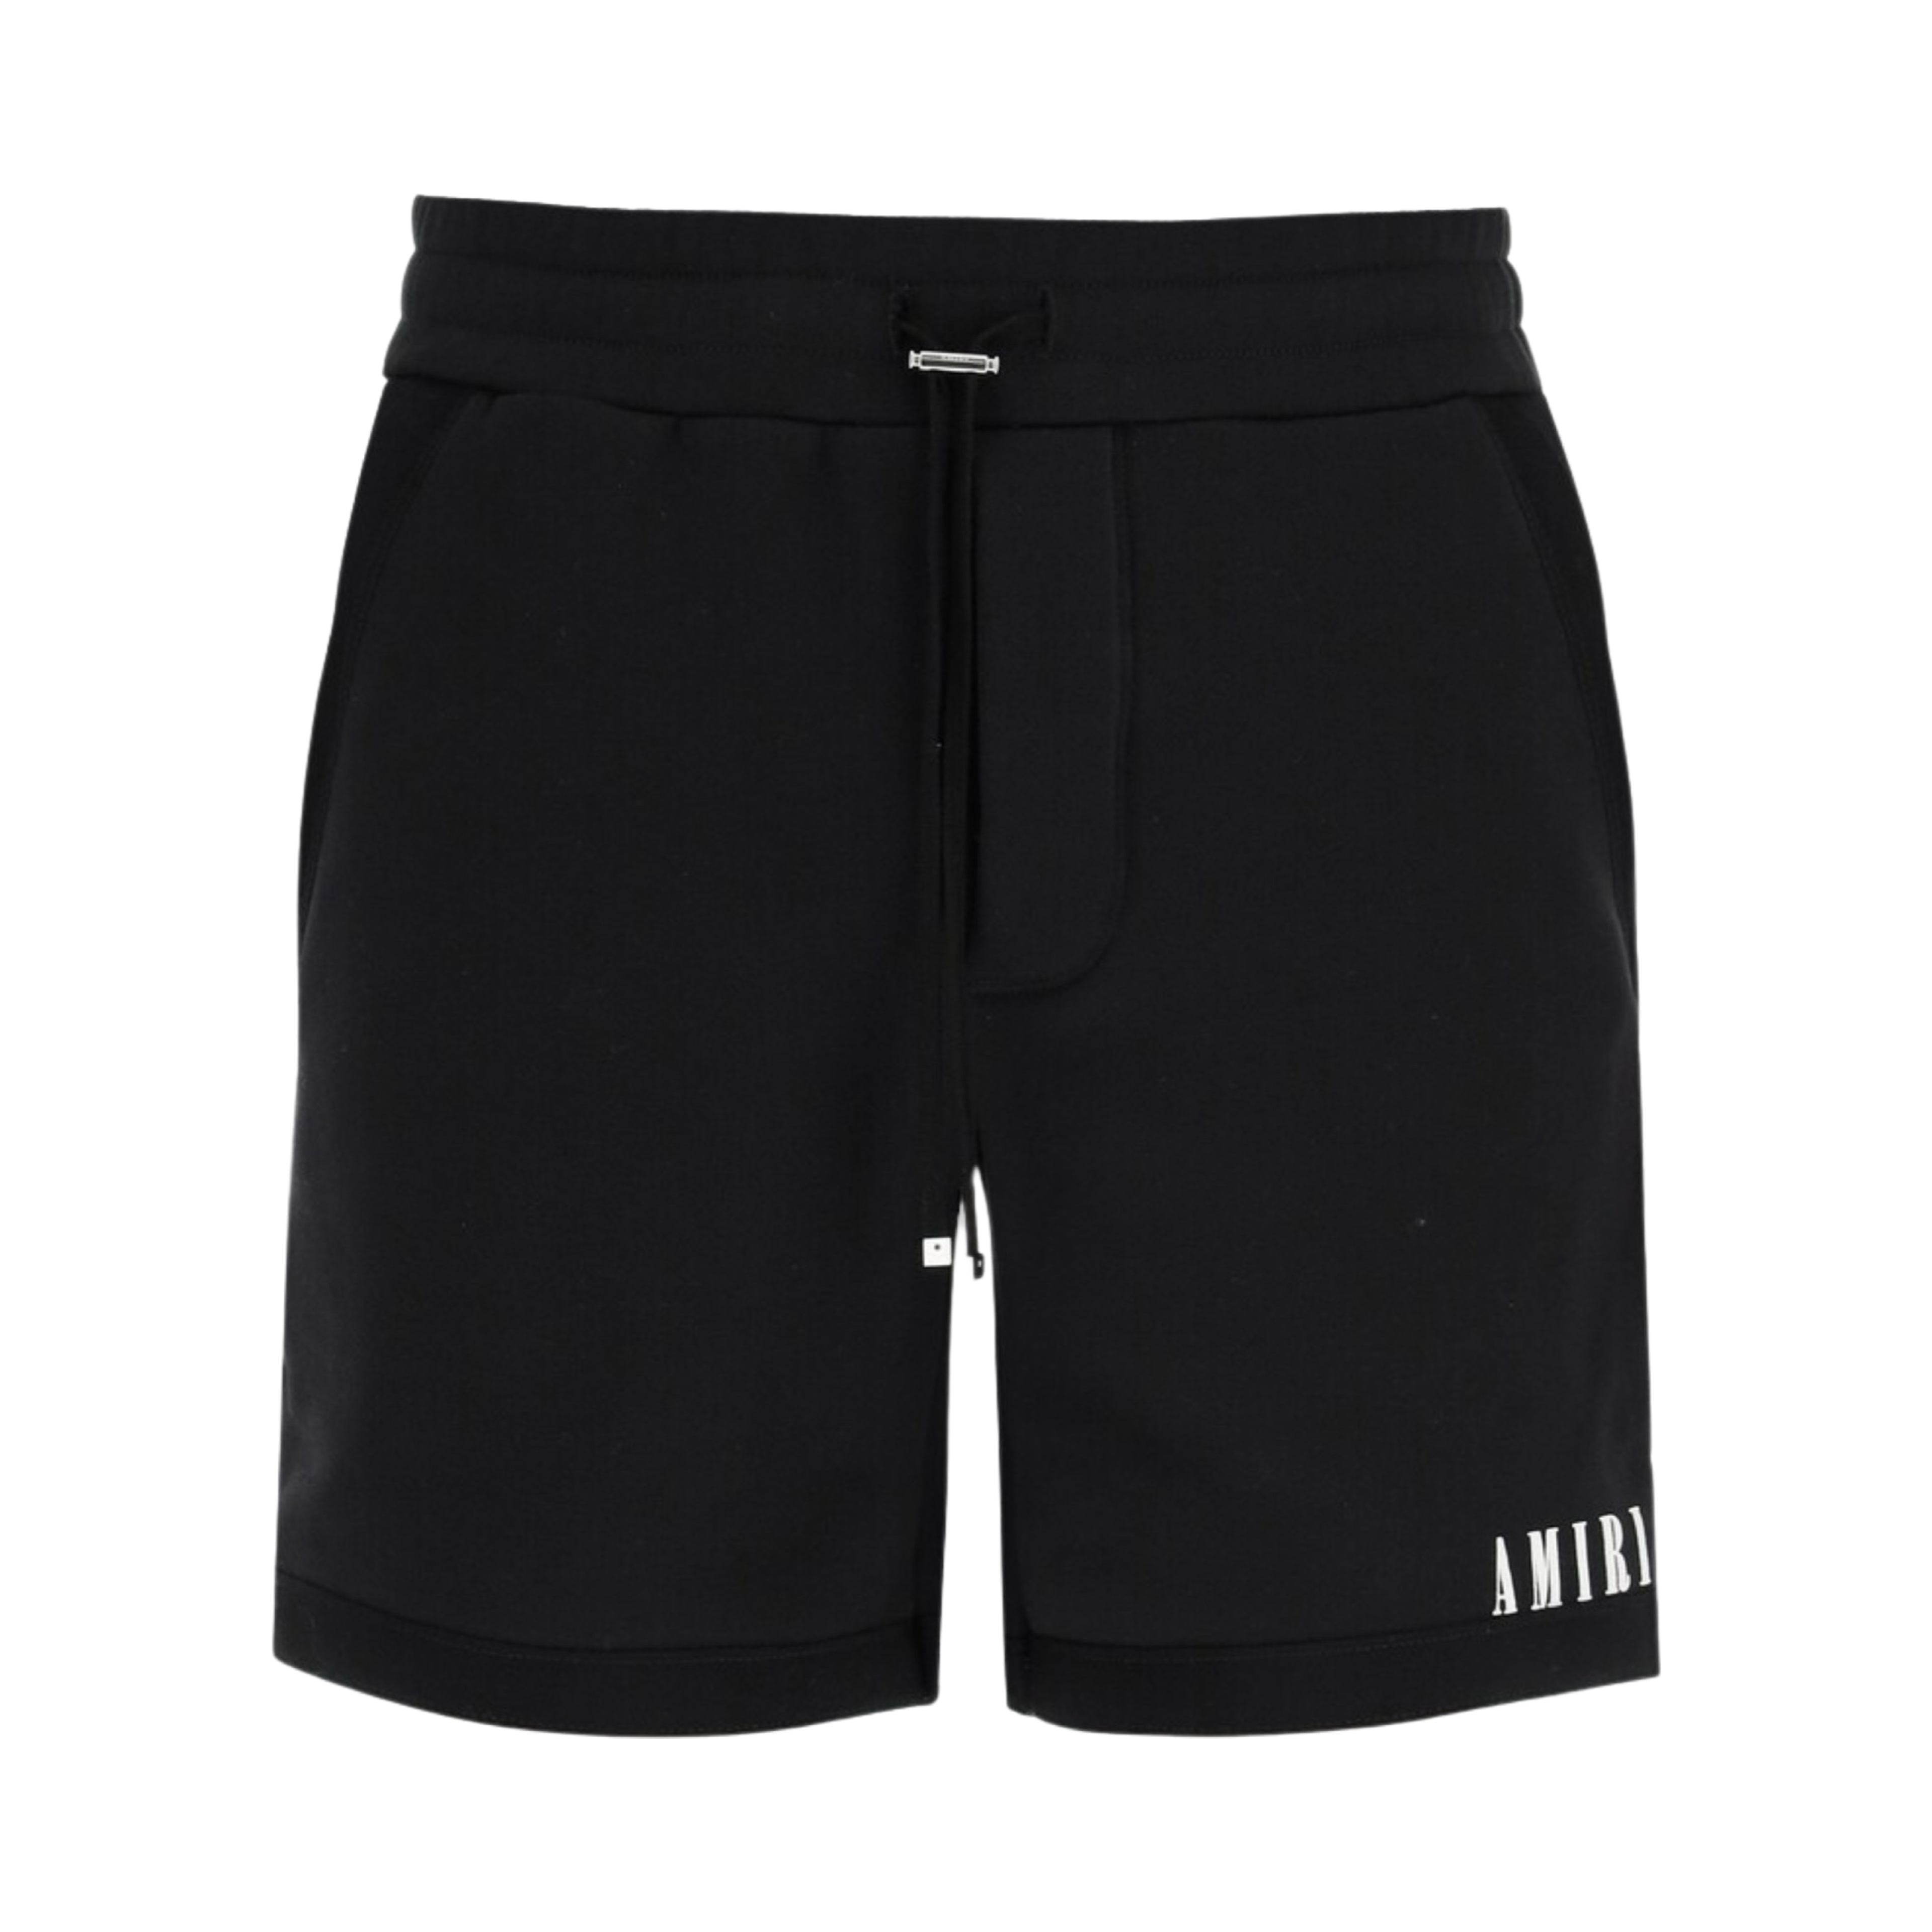 AMIRI CORE LOGO SWEATSHORT Black Shorts